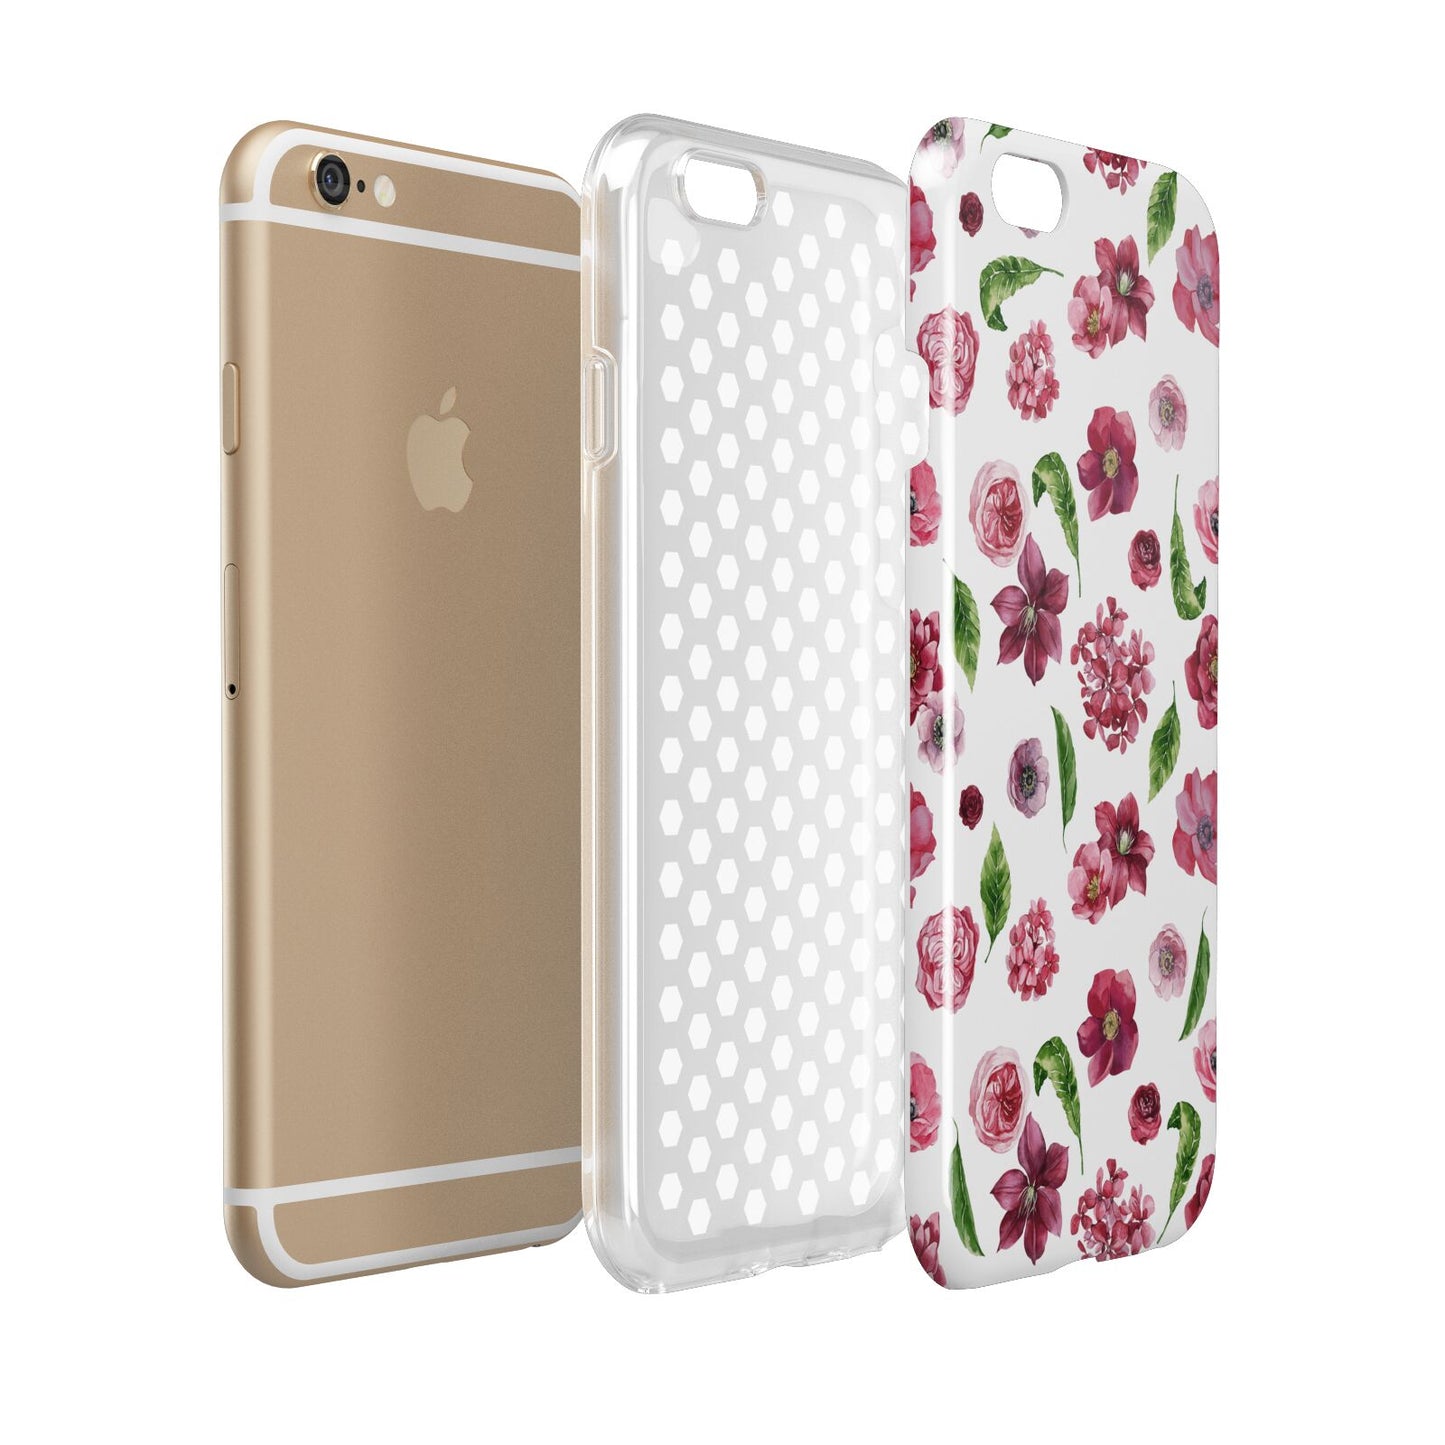 Pink Floral Apple iPhone 6 3D Tough Case Expanded view